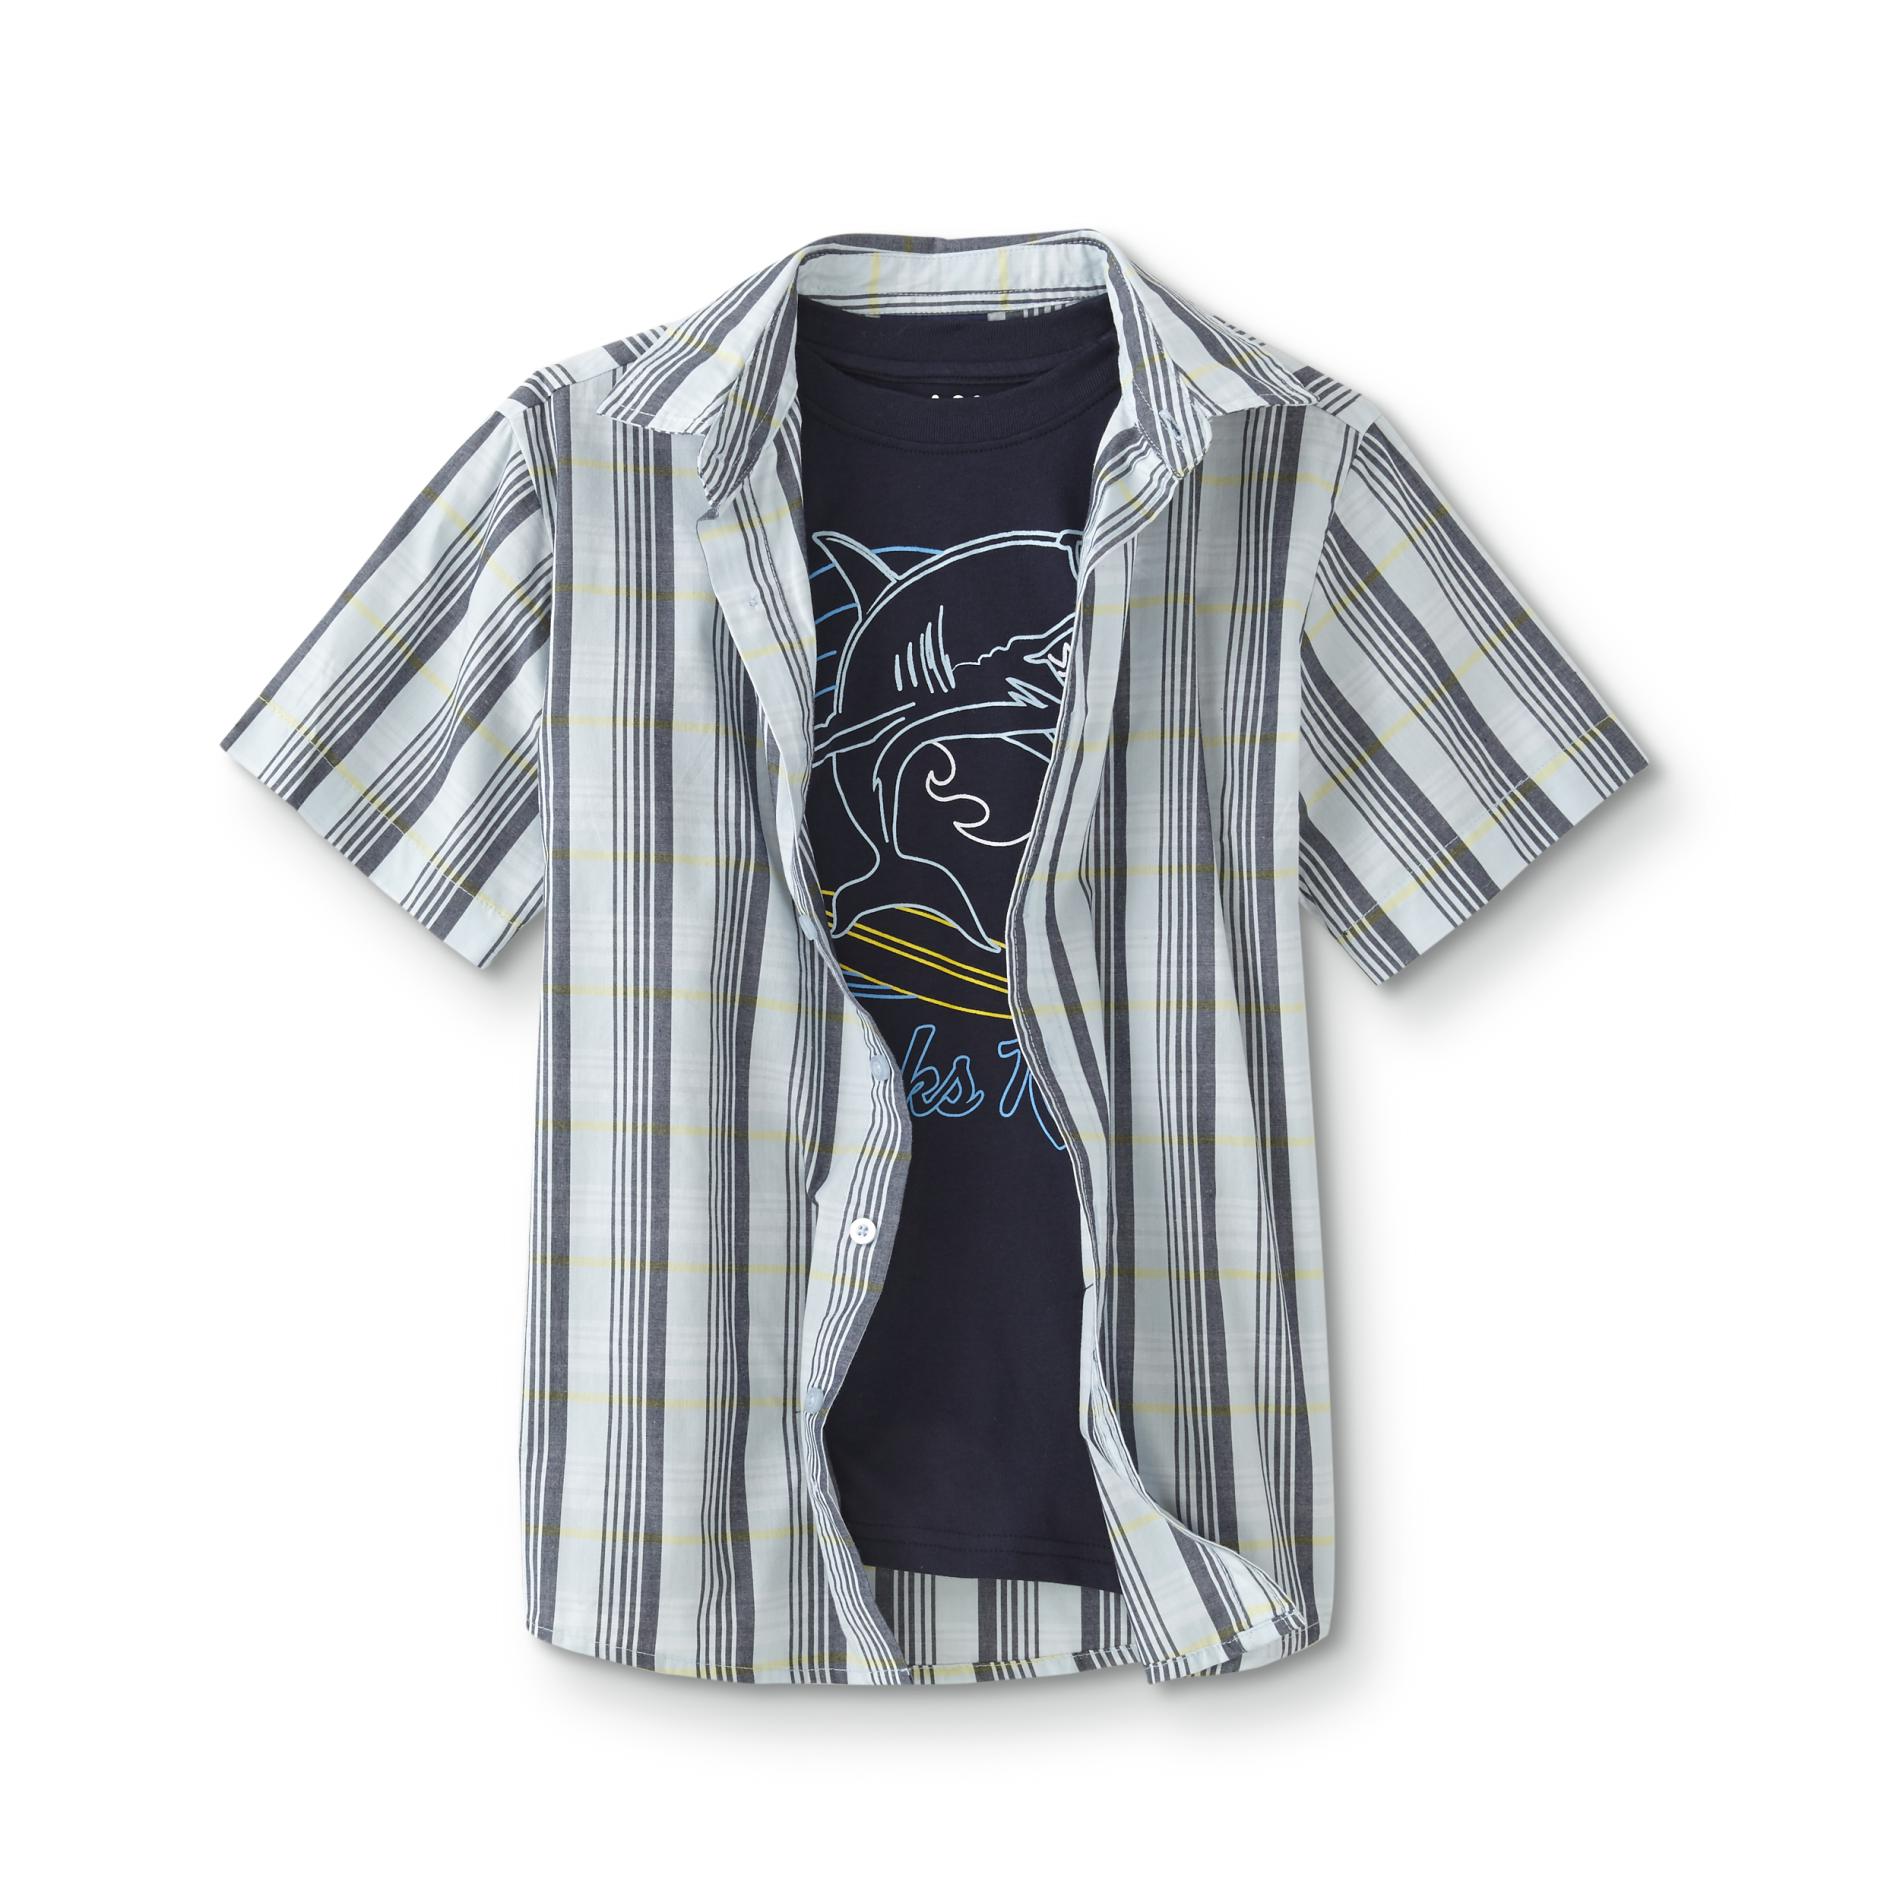 Simply Styled Boys' T-Shirt & Poplin Shirt - Striped/Sharks